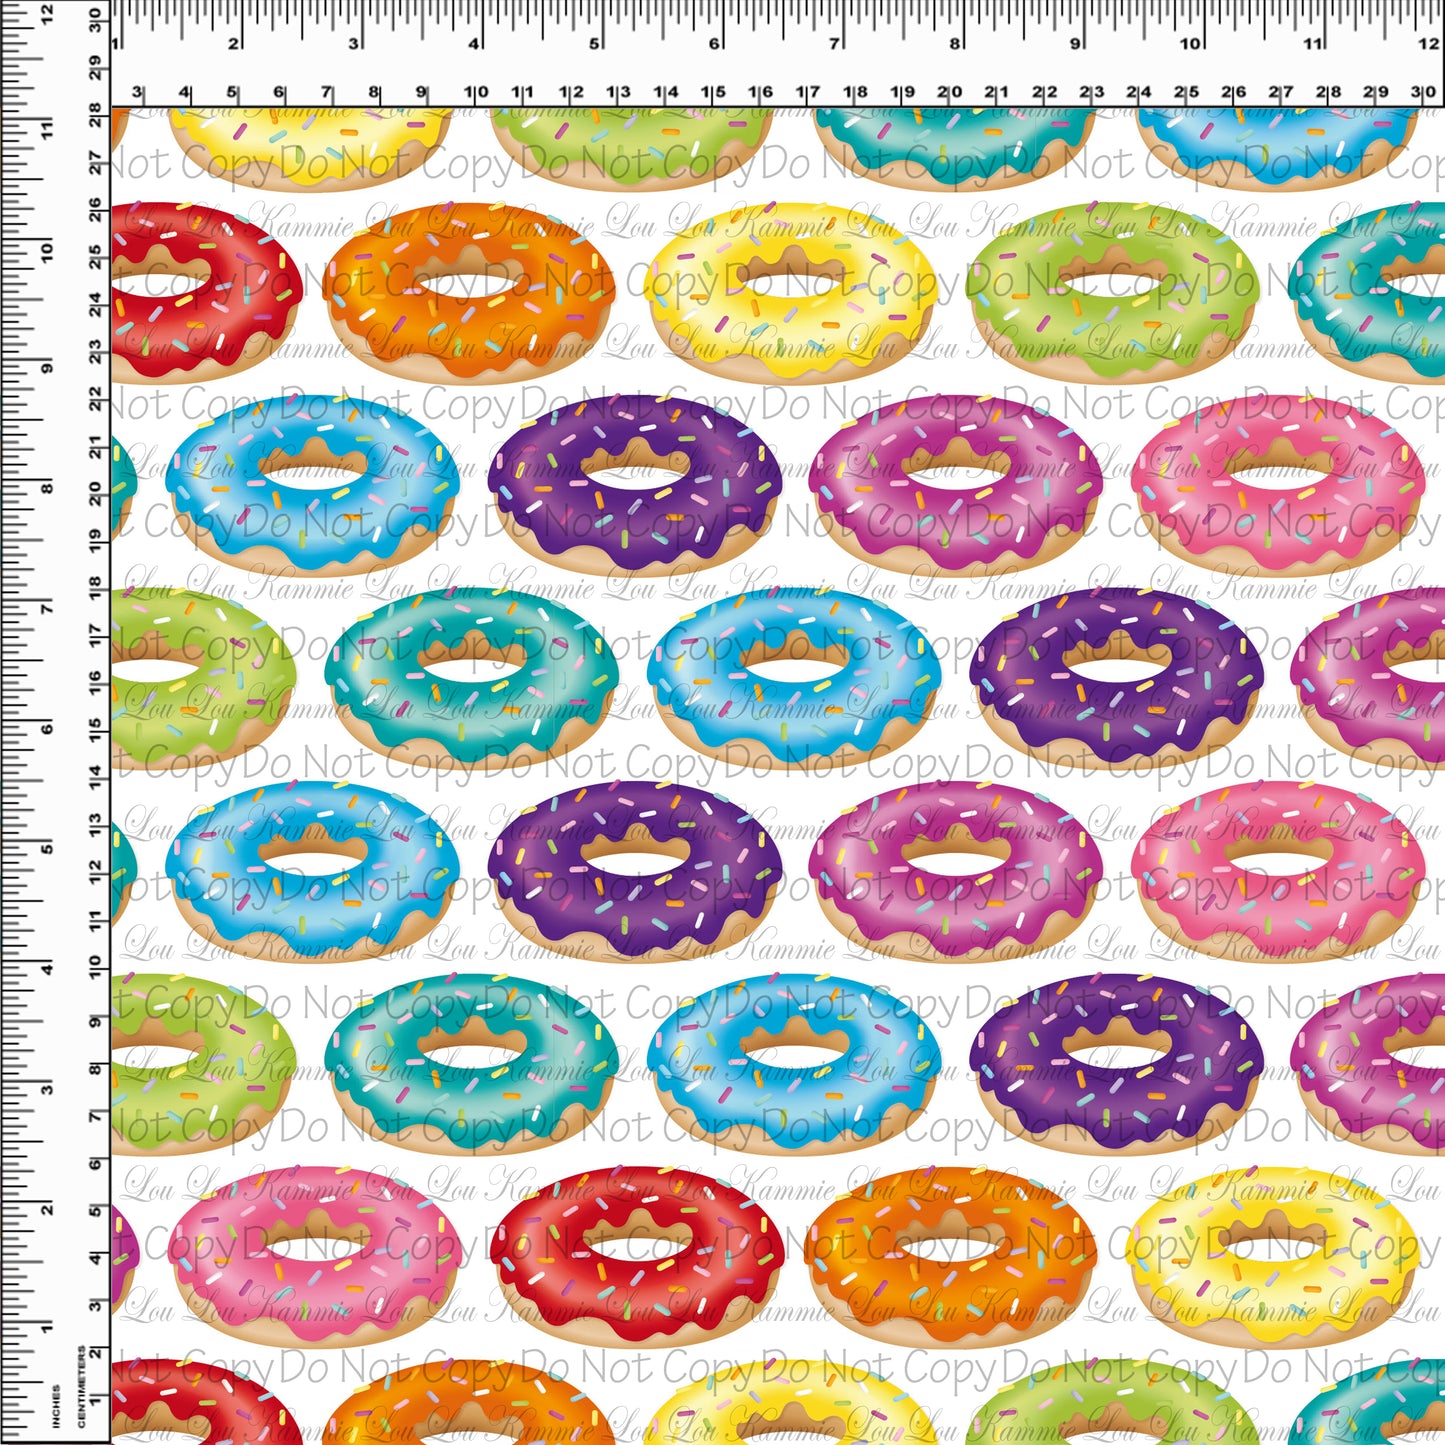 R119 Pre-Order Sweet Beginnings - Line up the donuts